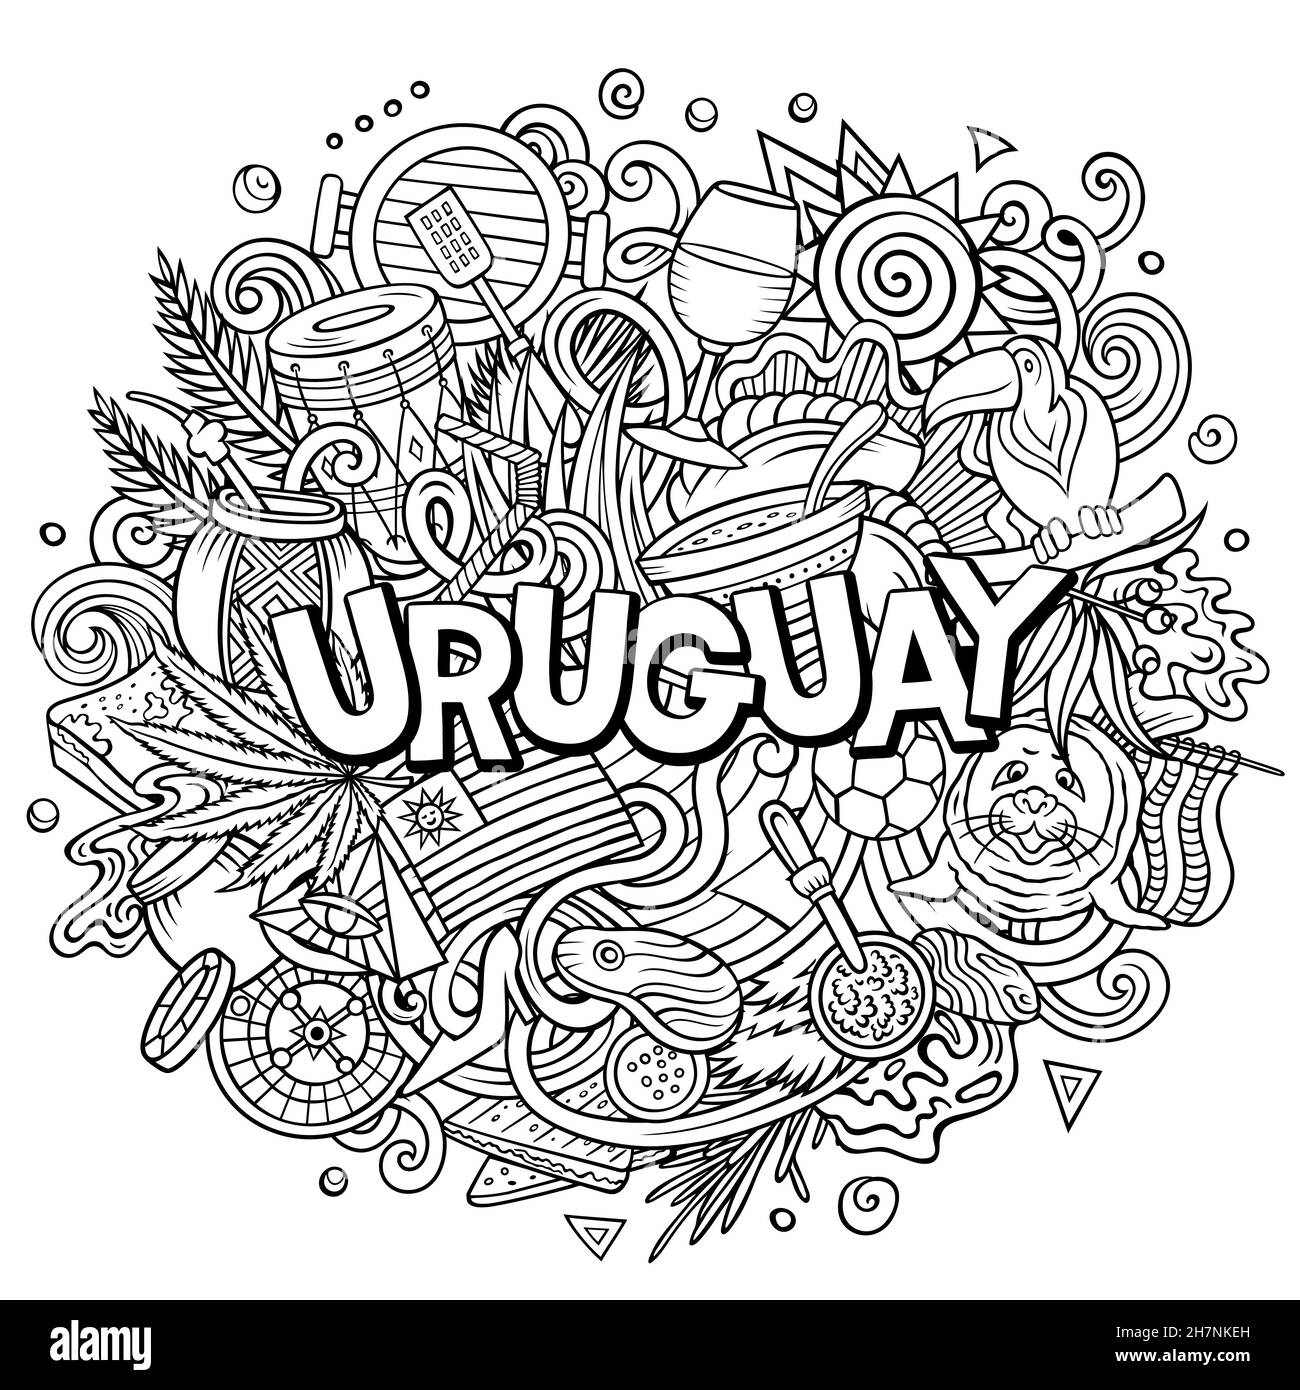 Uruguay hand drawn cartoon doodle illustration. Funny local design. Creative vector background Stock Vector